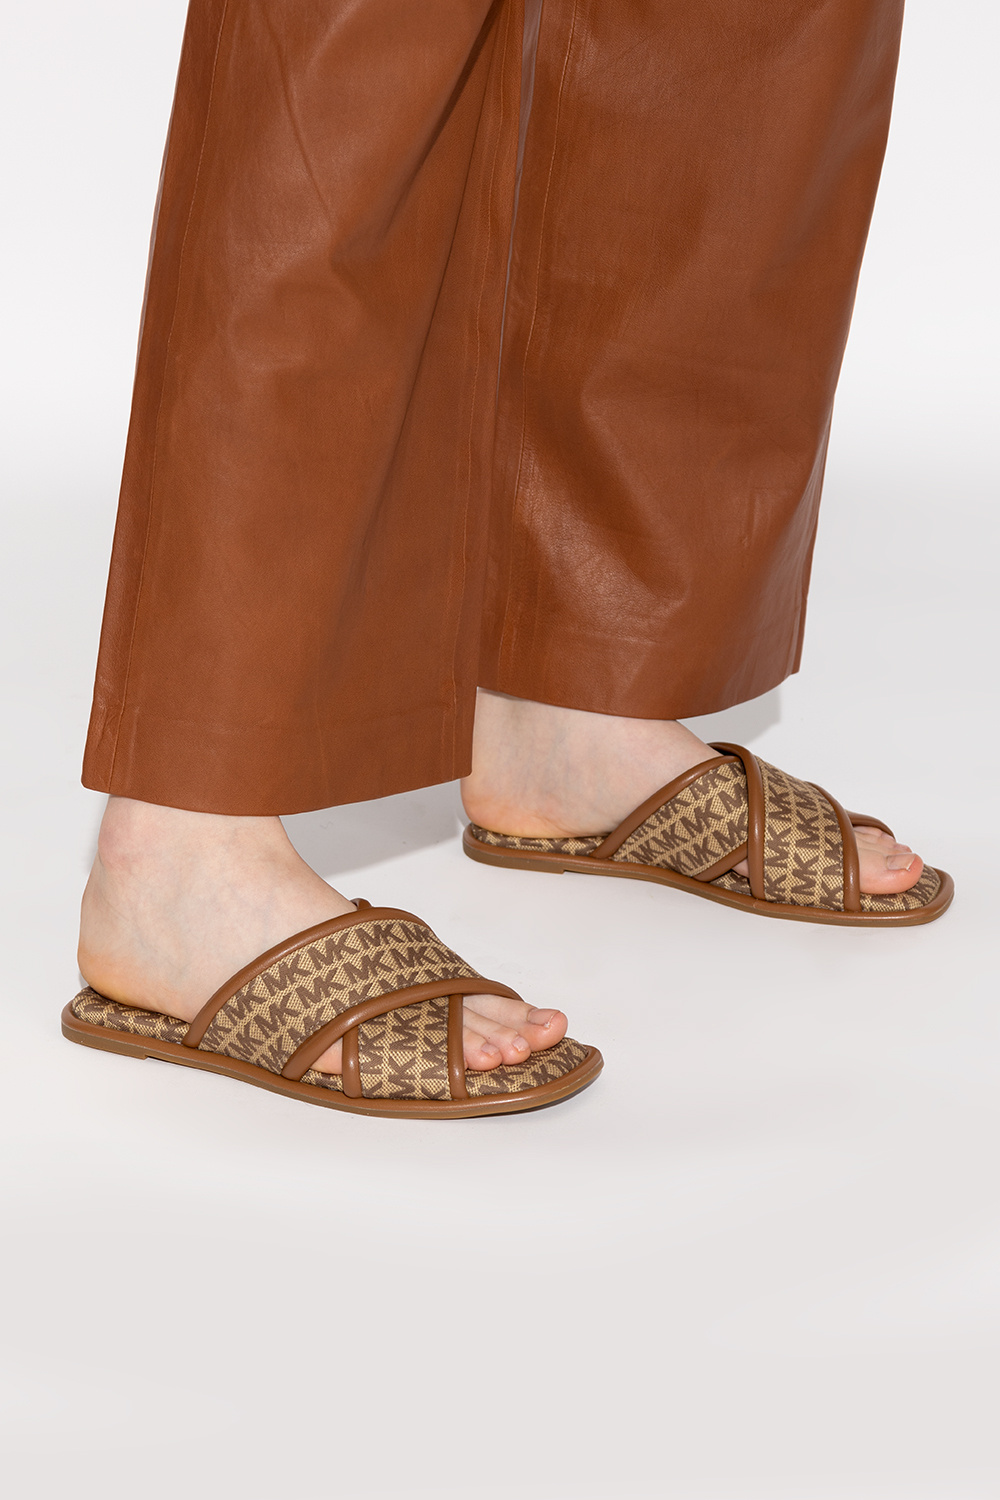 Michael Michael Kors ‘Gideon’ slide sandals